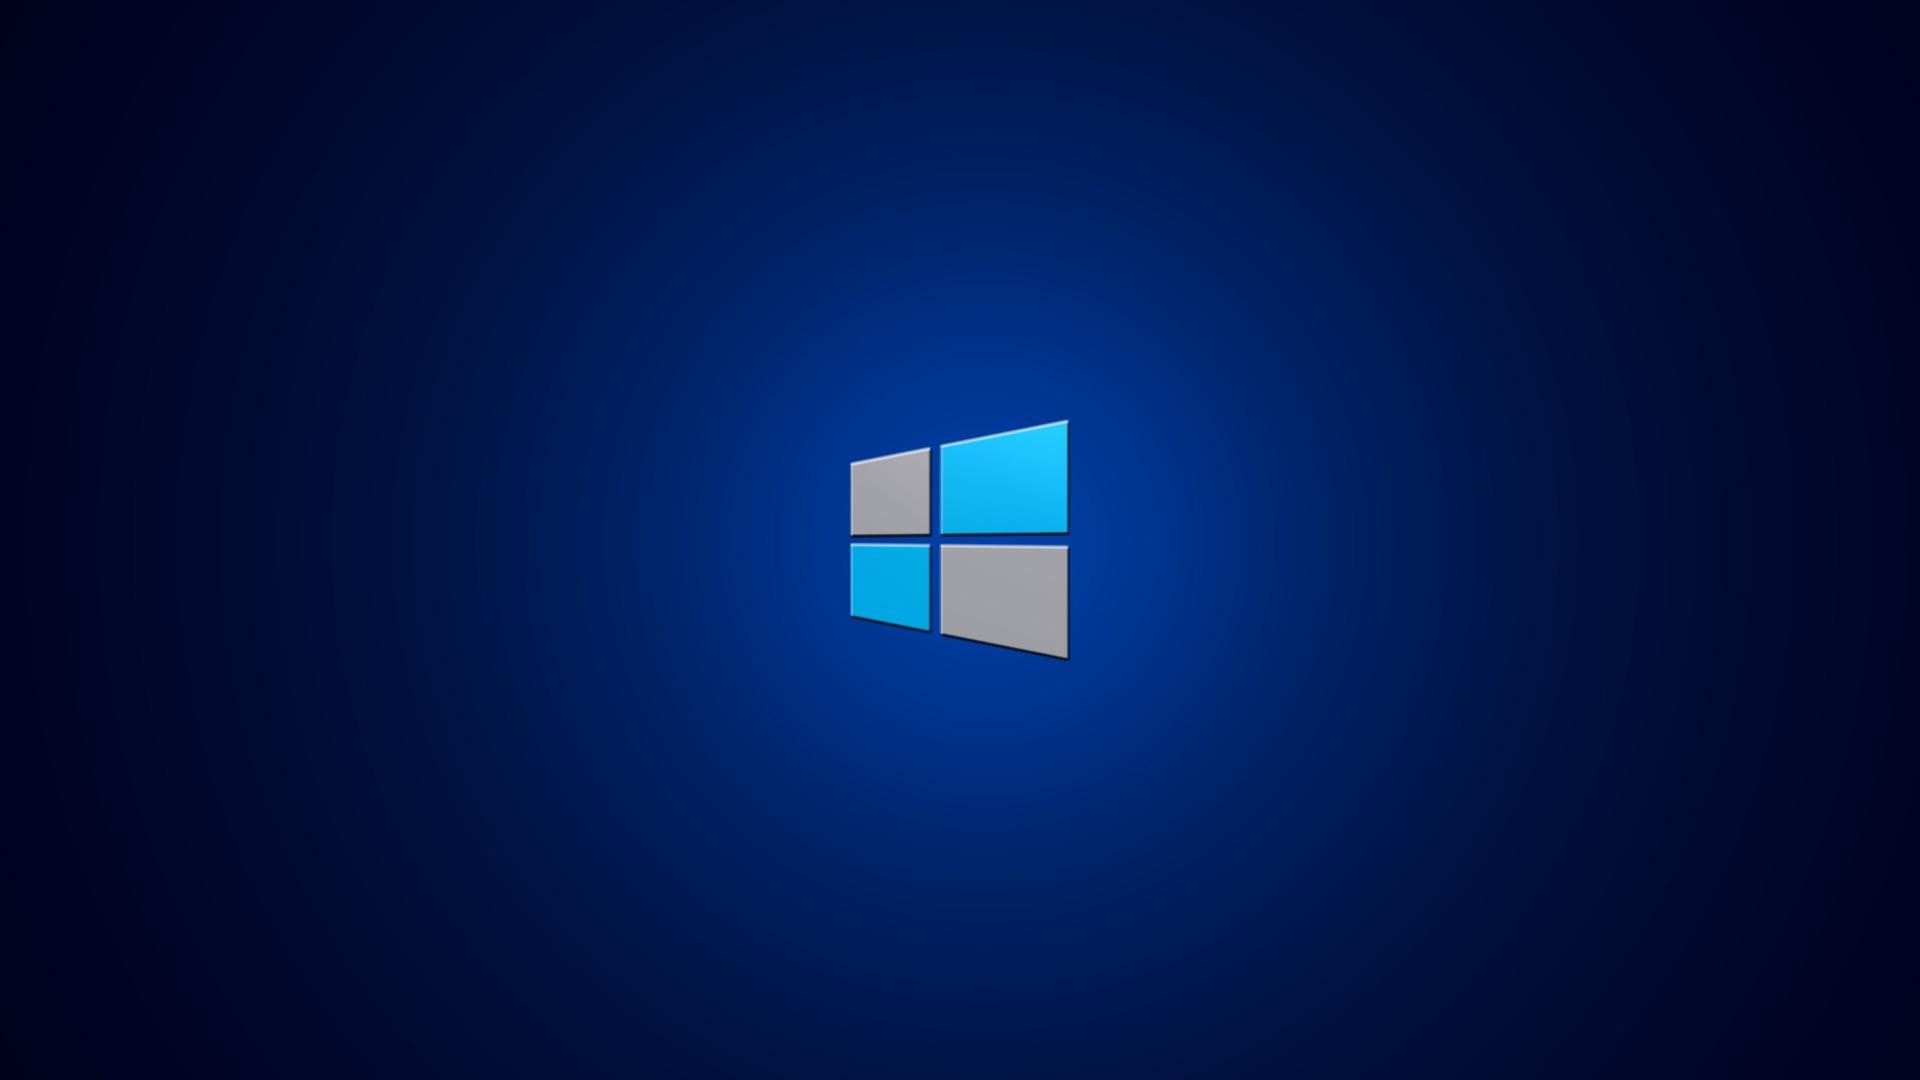 Windows 8 Official Logo - Windows 8 Minimal Official Logo 1080p HD Wallpaper 1080p HD